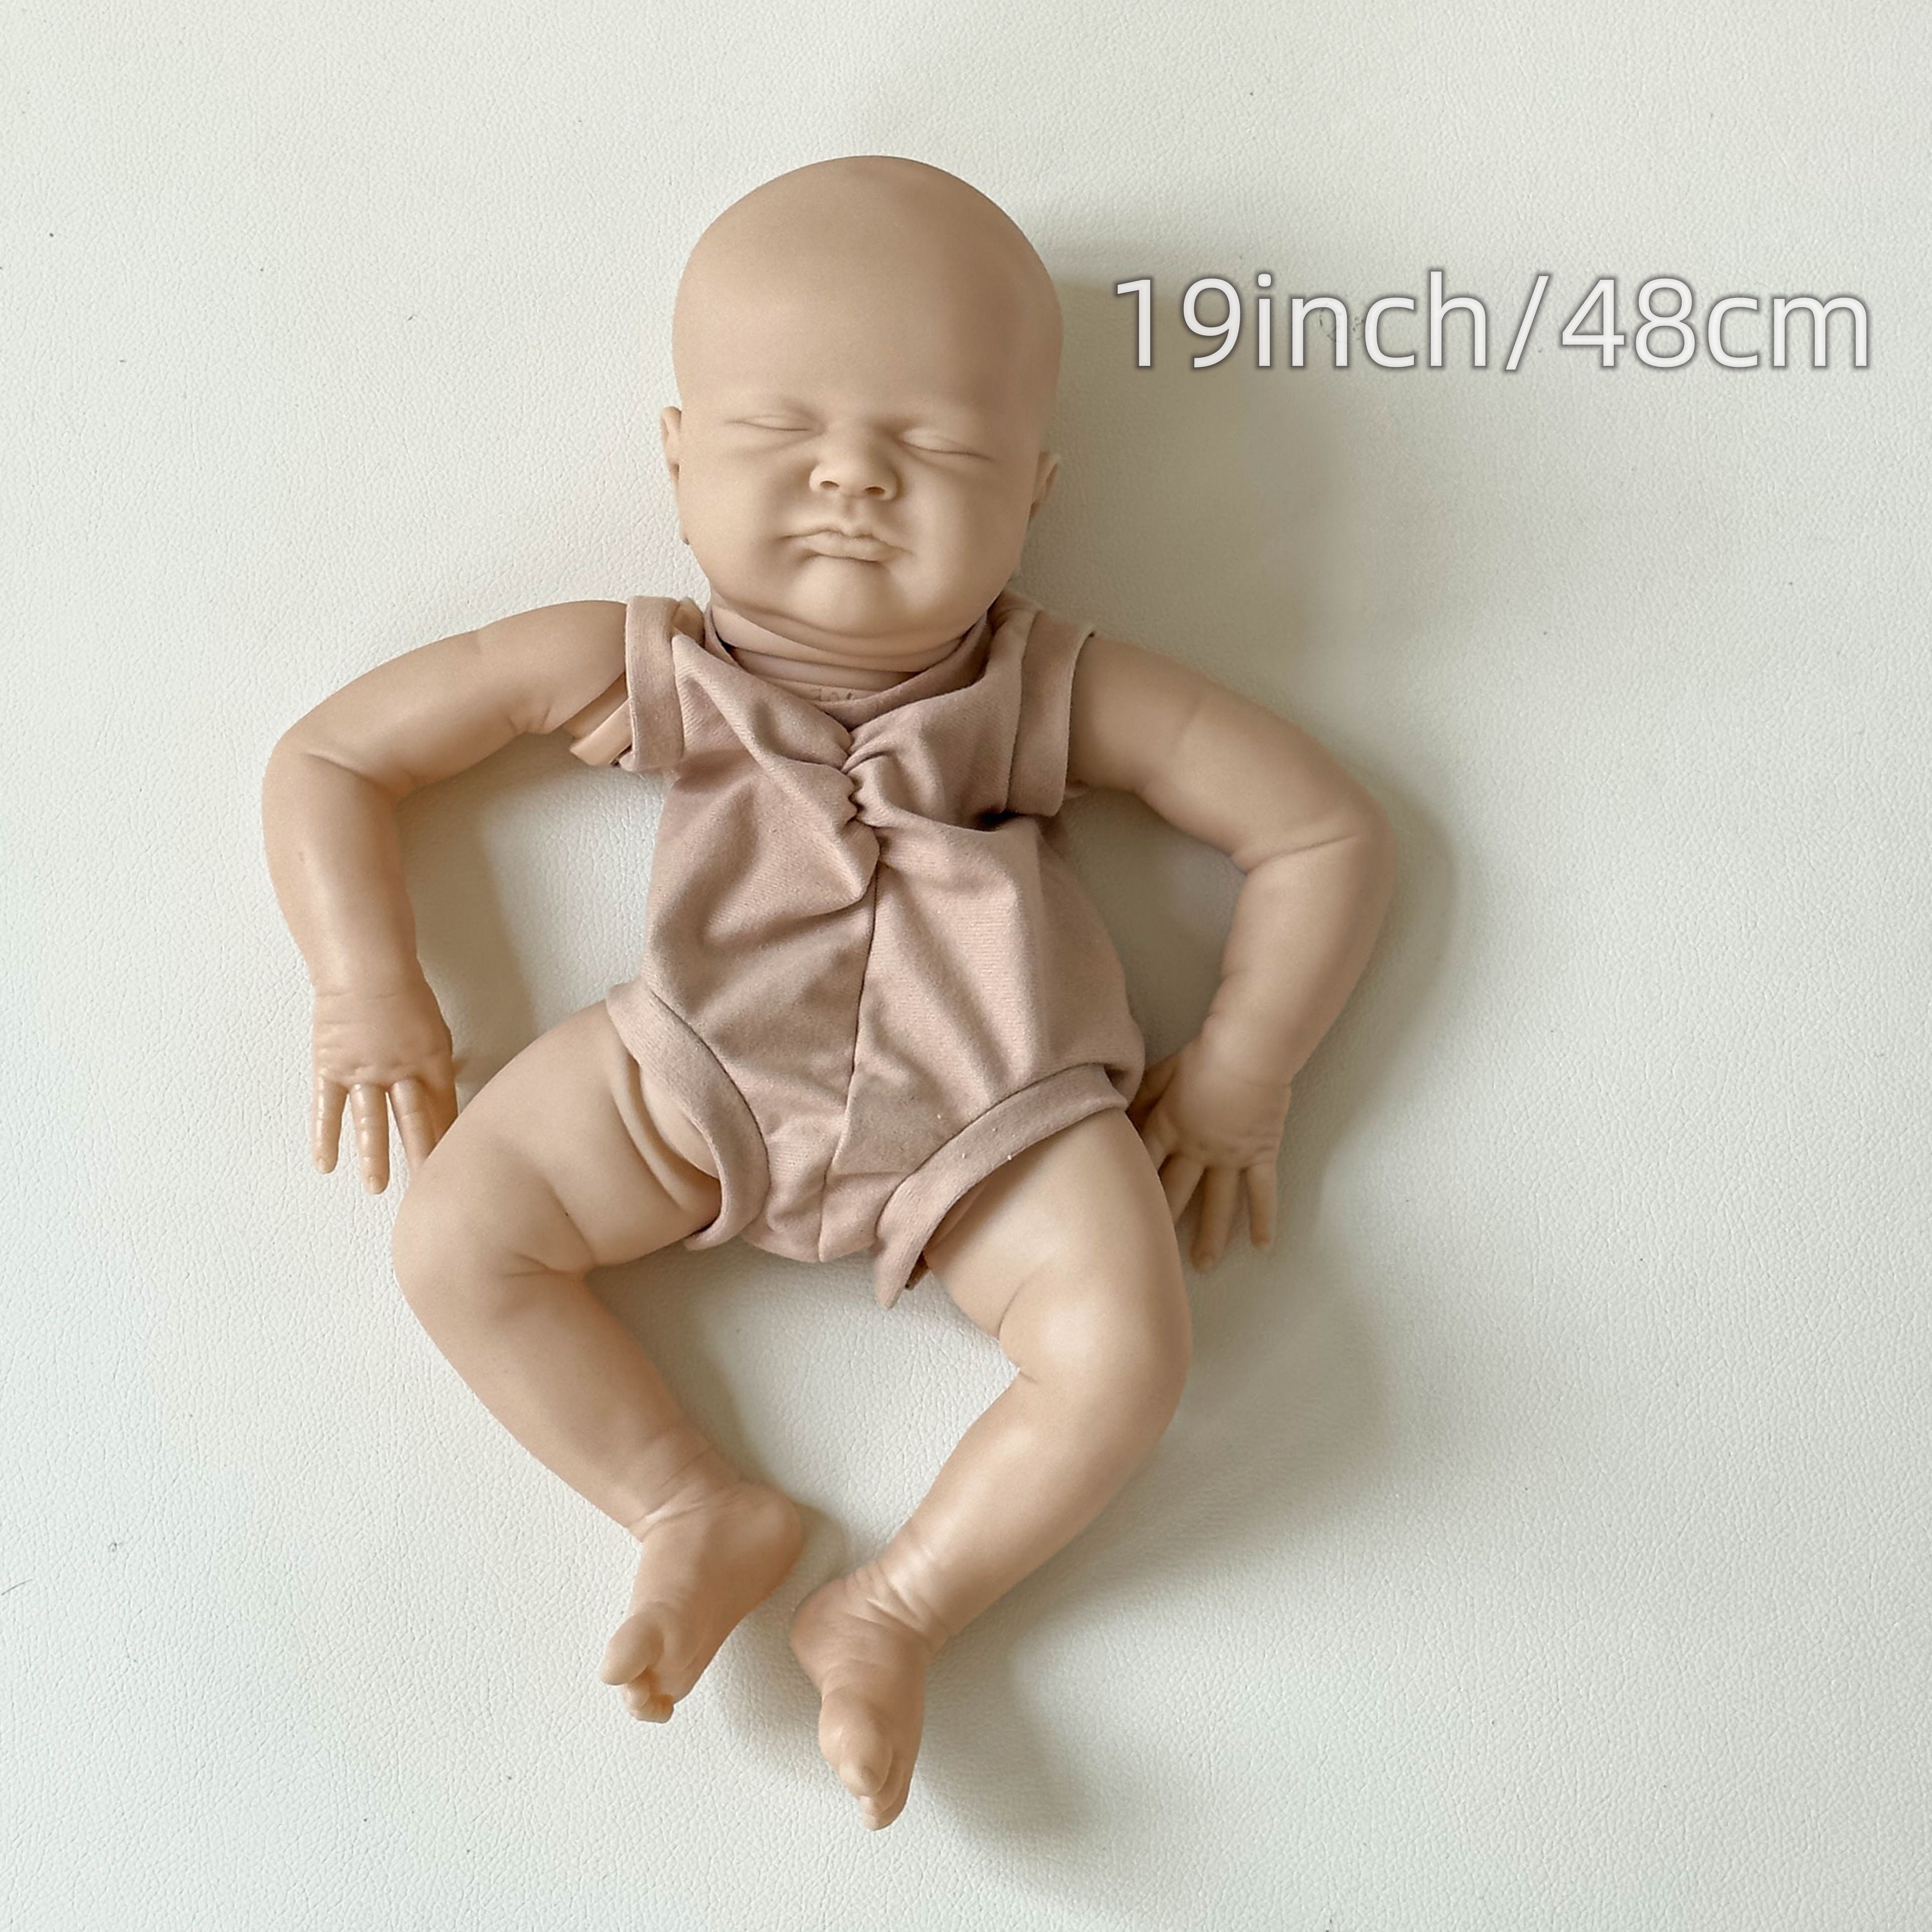 19 Inch/ 48cm Unpainted Doll DIY Kits, Reborn Doll, With Cloth Body